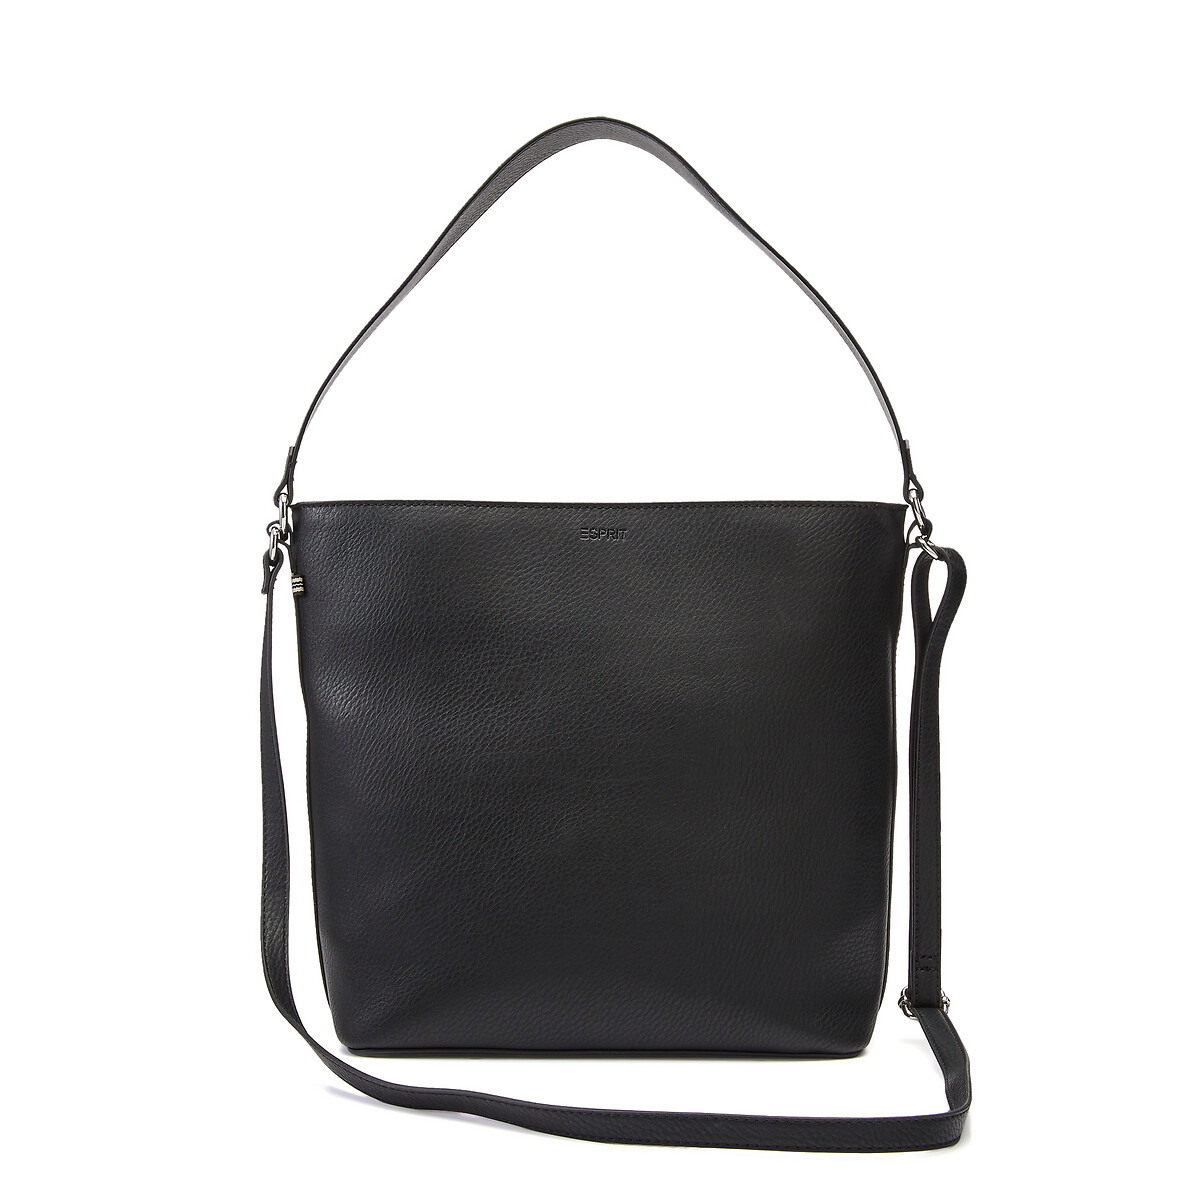 Zipped Top Handle Shoulder Handbag In Faux Leather